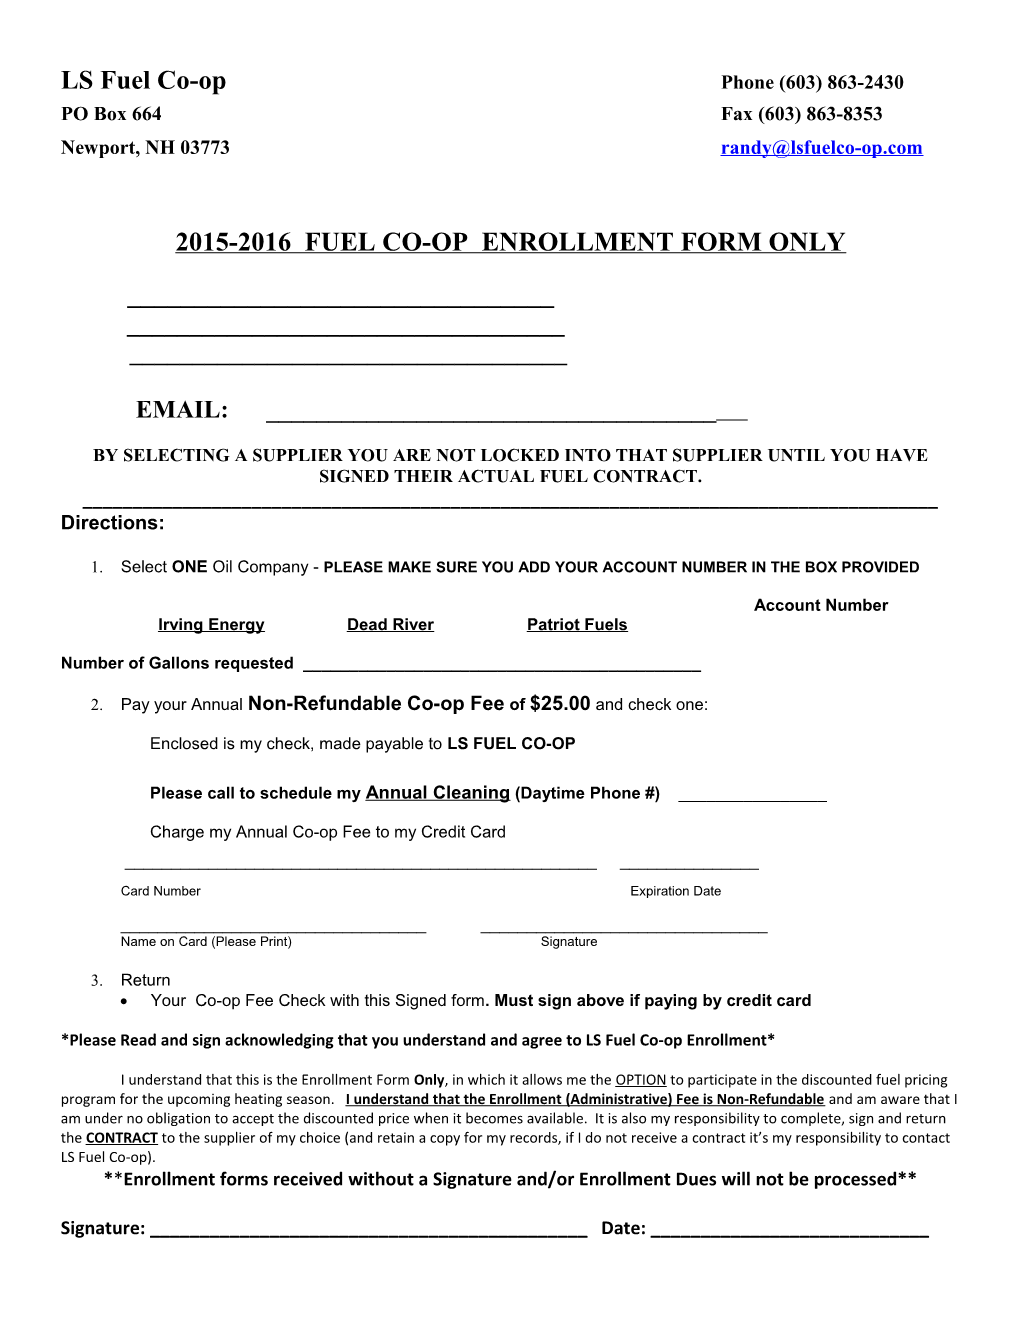 2015-2016 Fuel Co-Op Enrollment Form Only